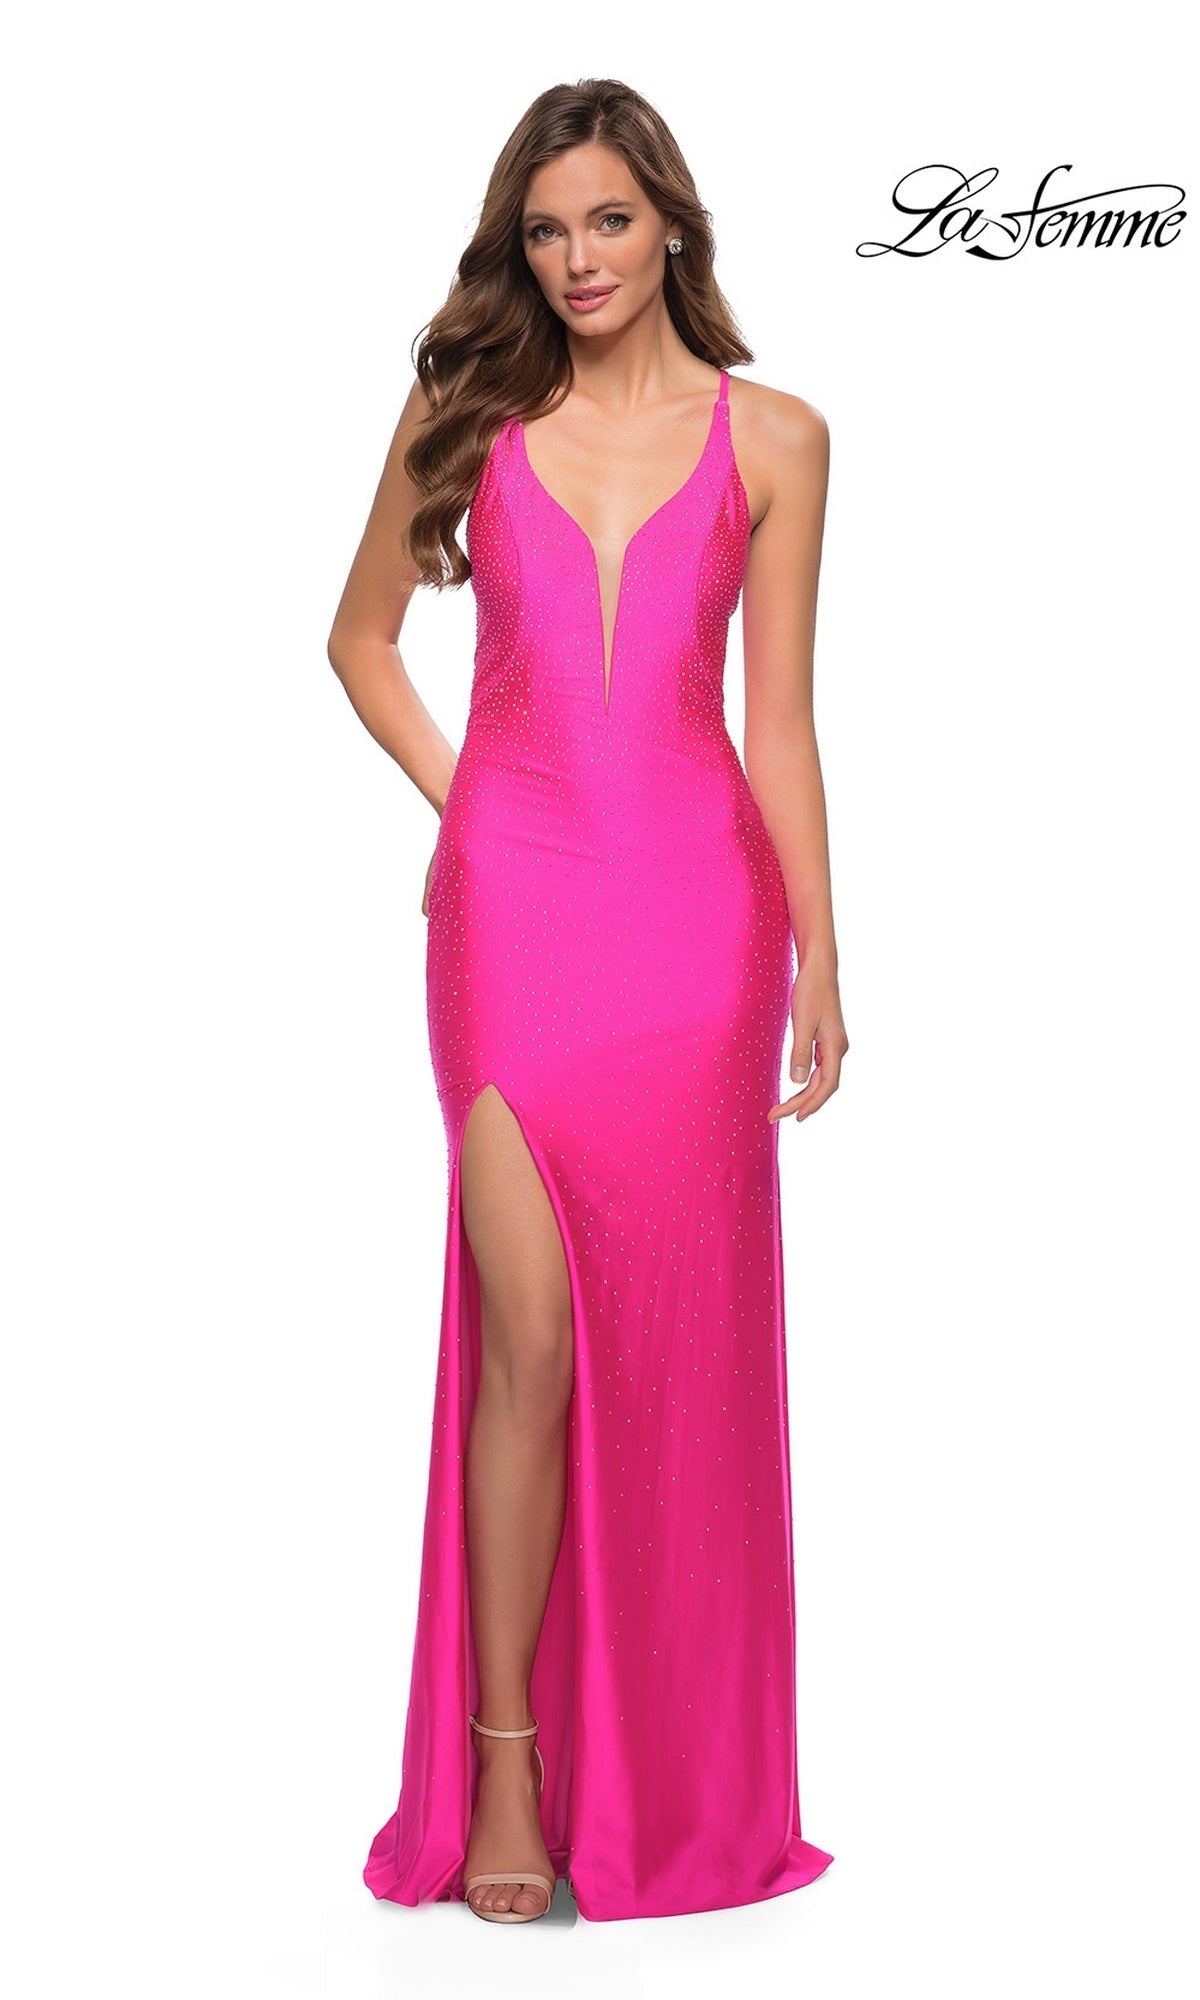 Neon Pink La Femme 29969 Formal Prom Dress